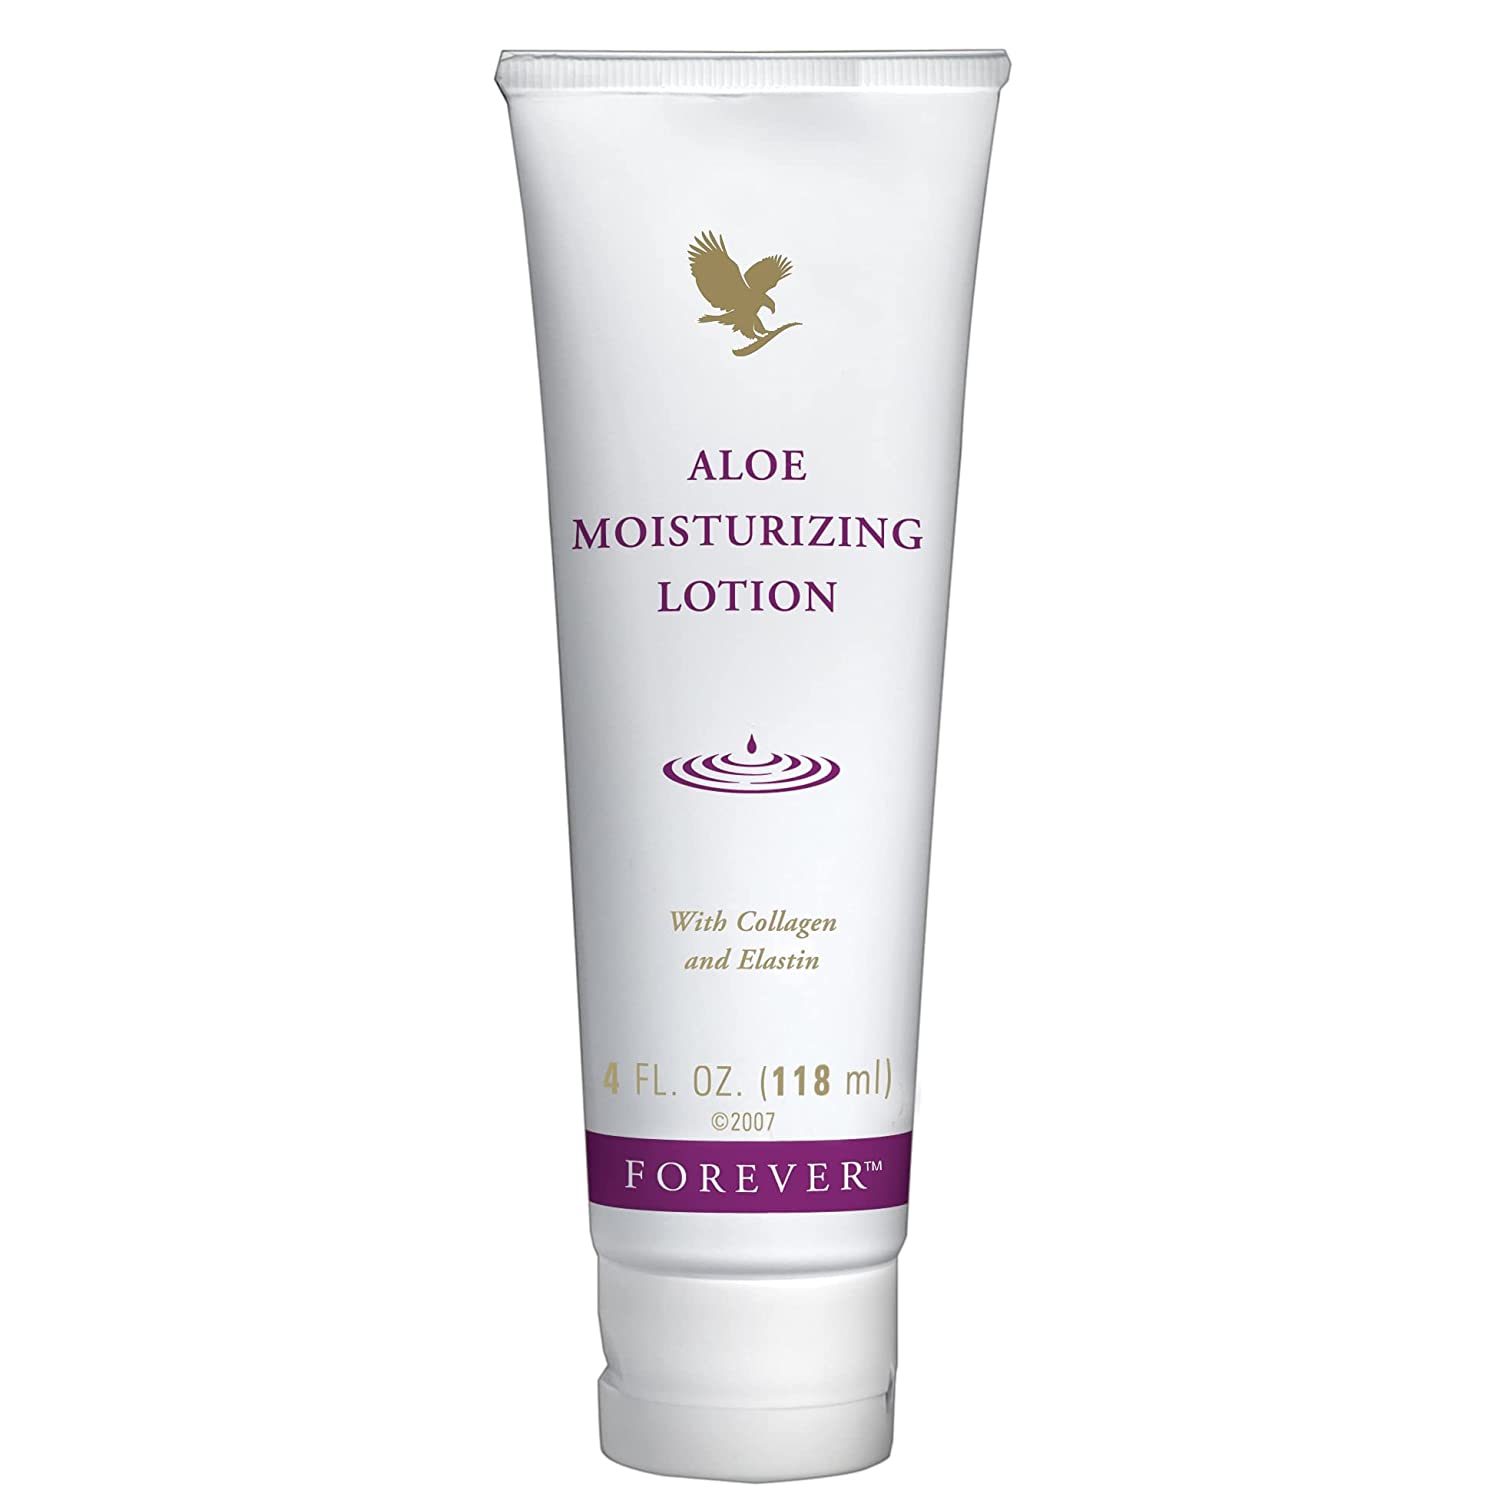 aloe-moisturizing-lotion